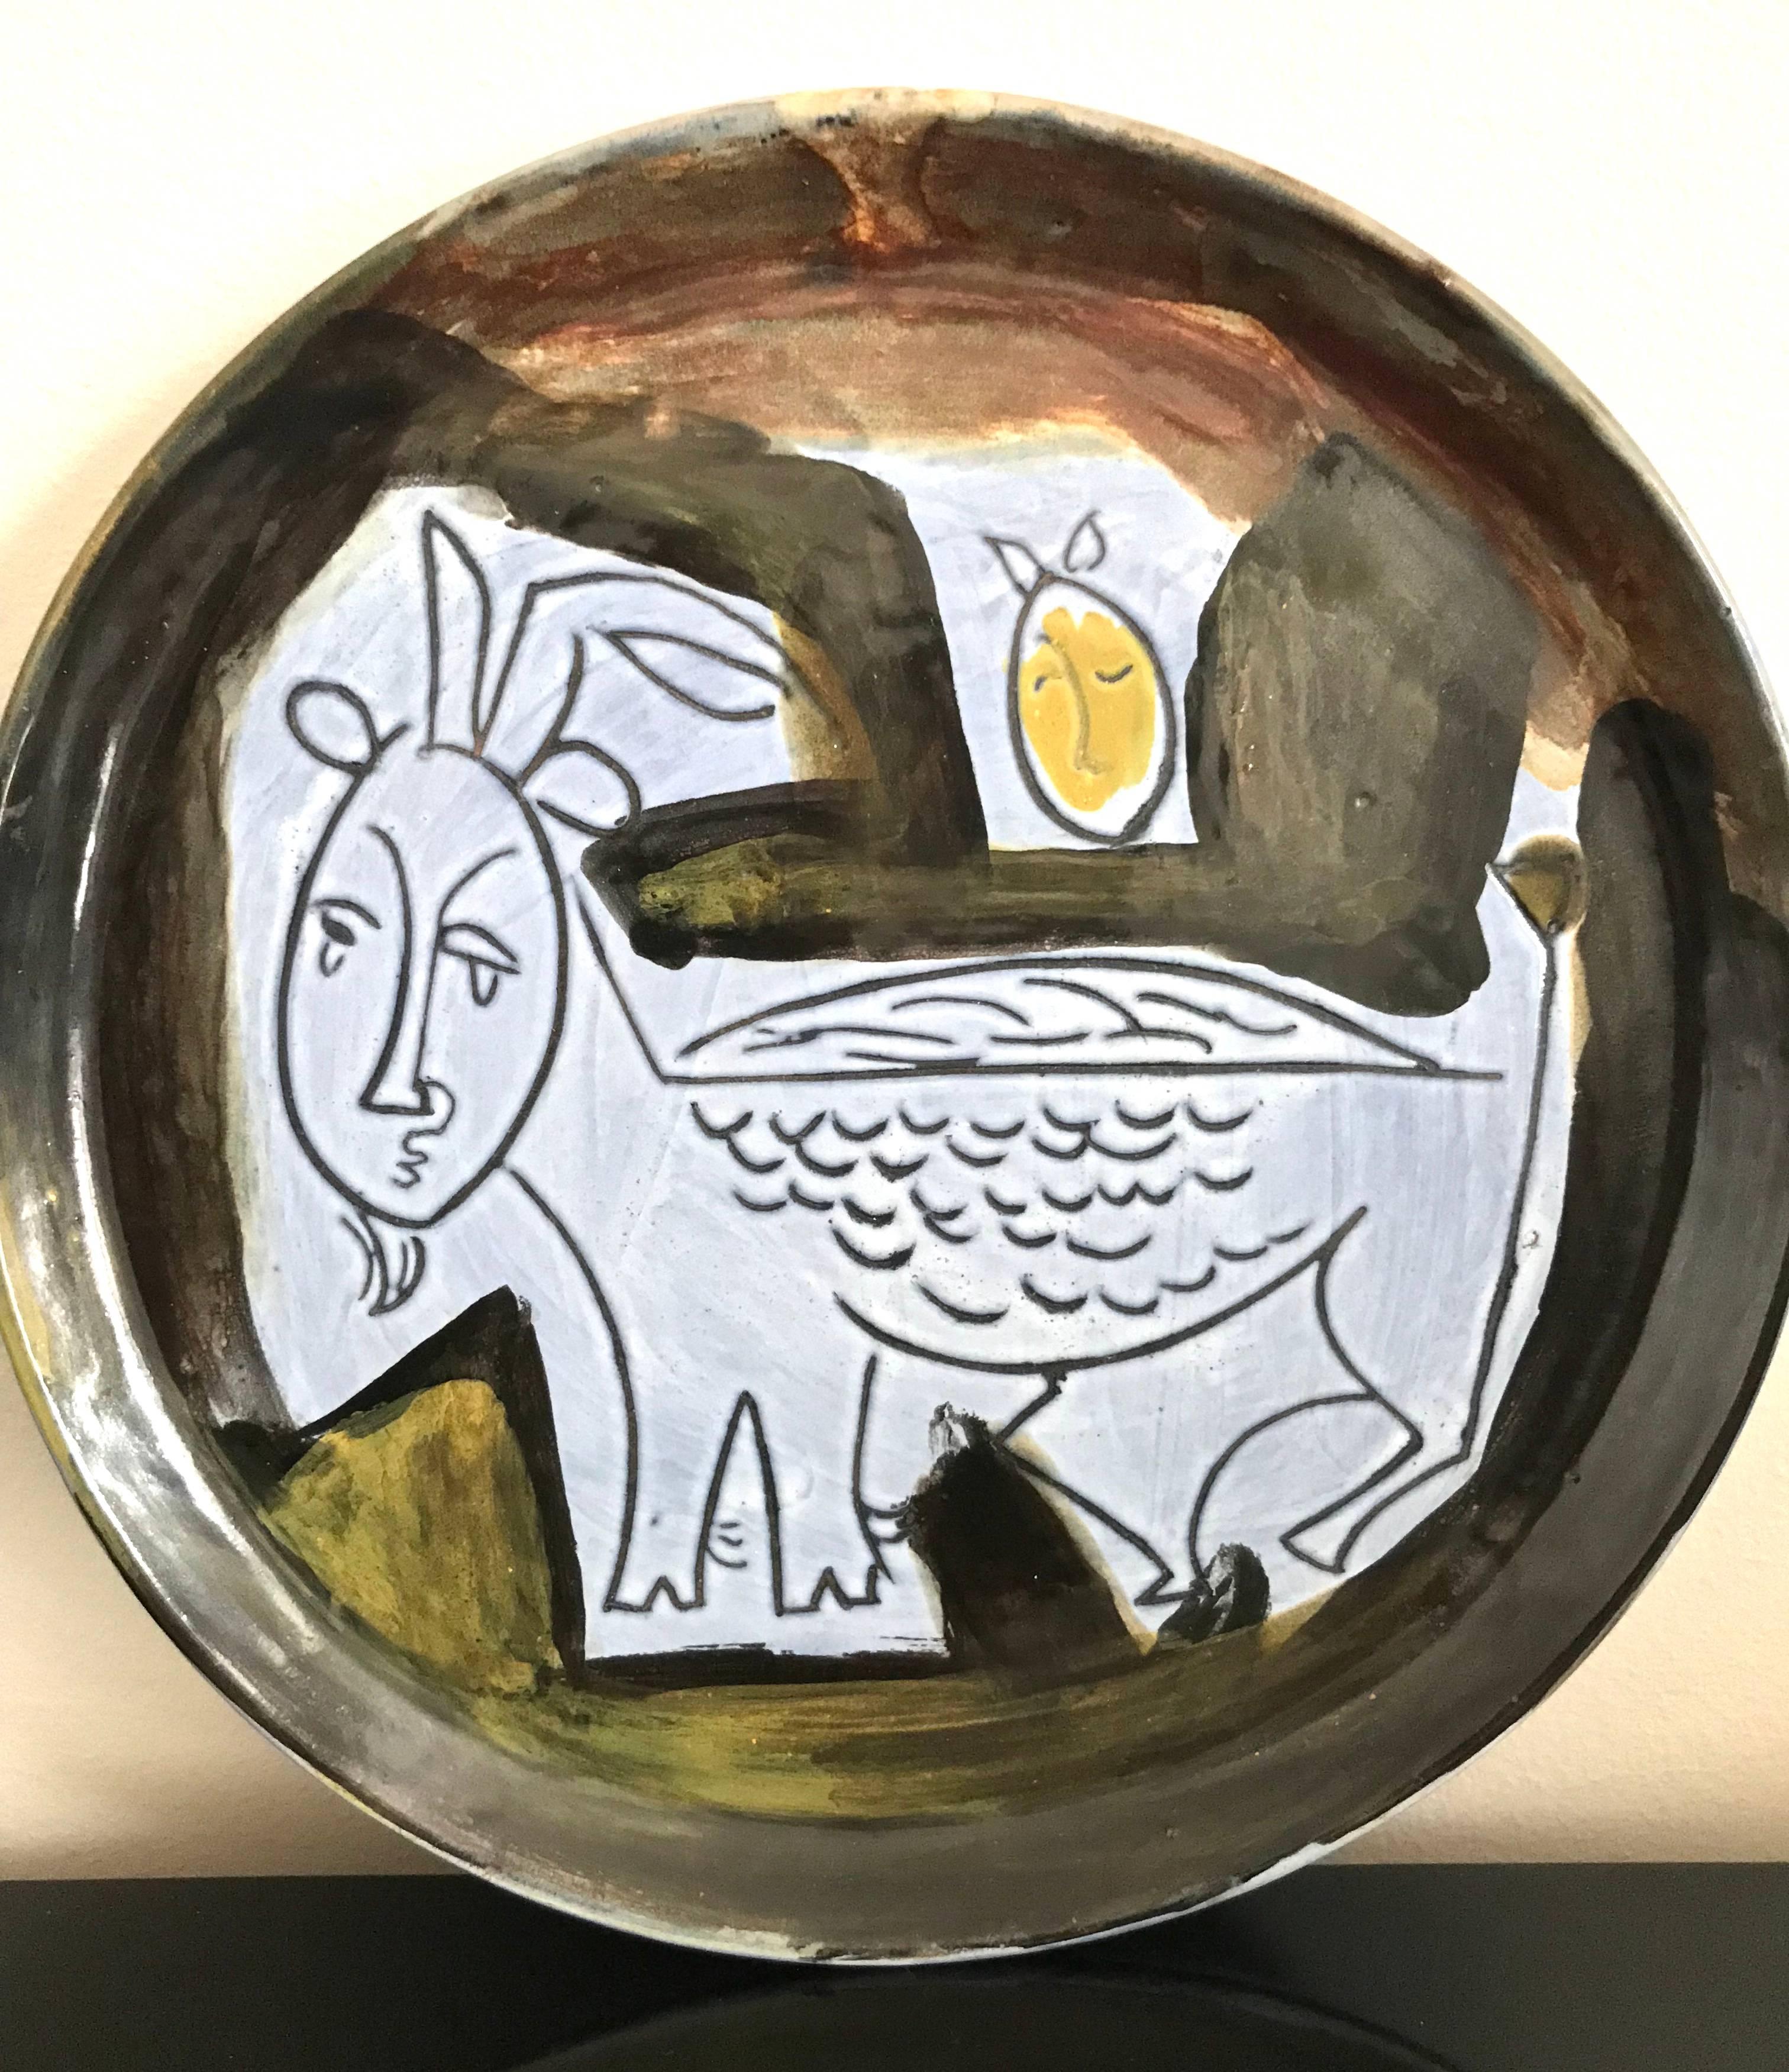 Decorative ceramic dish by Jacques Innocenti, France, 1950s.